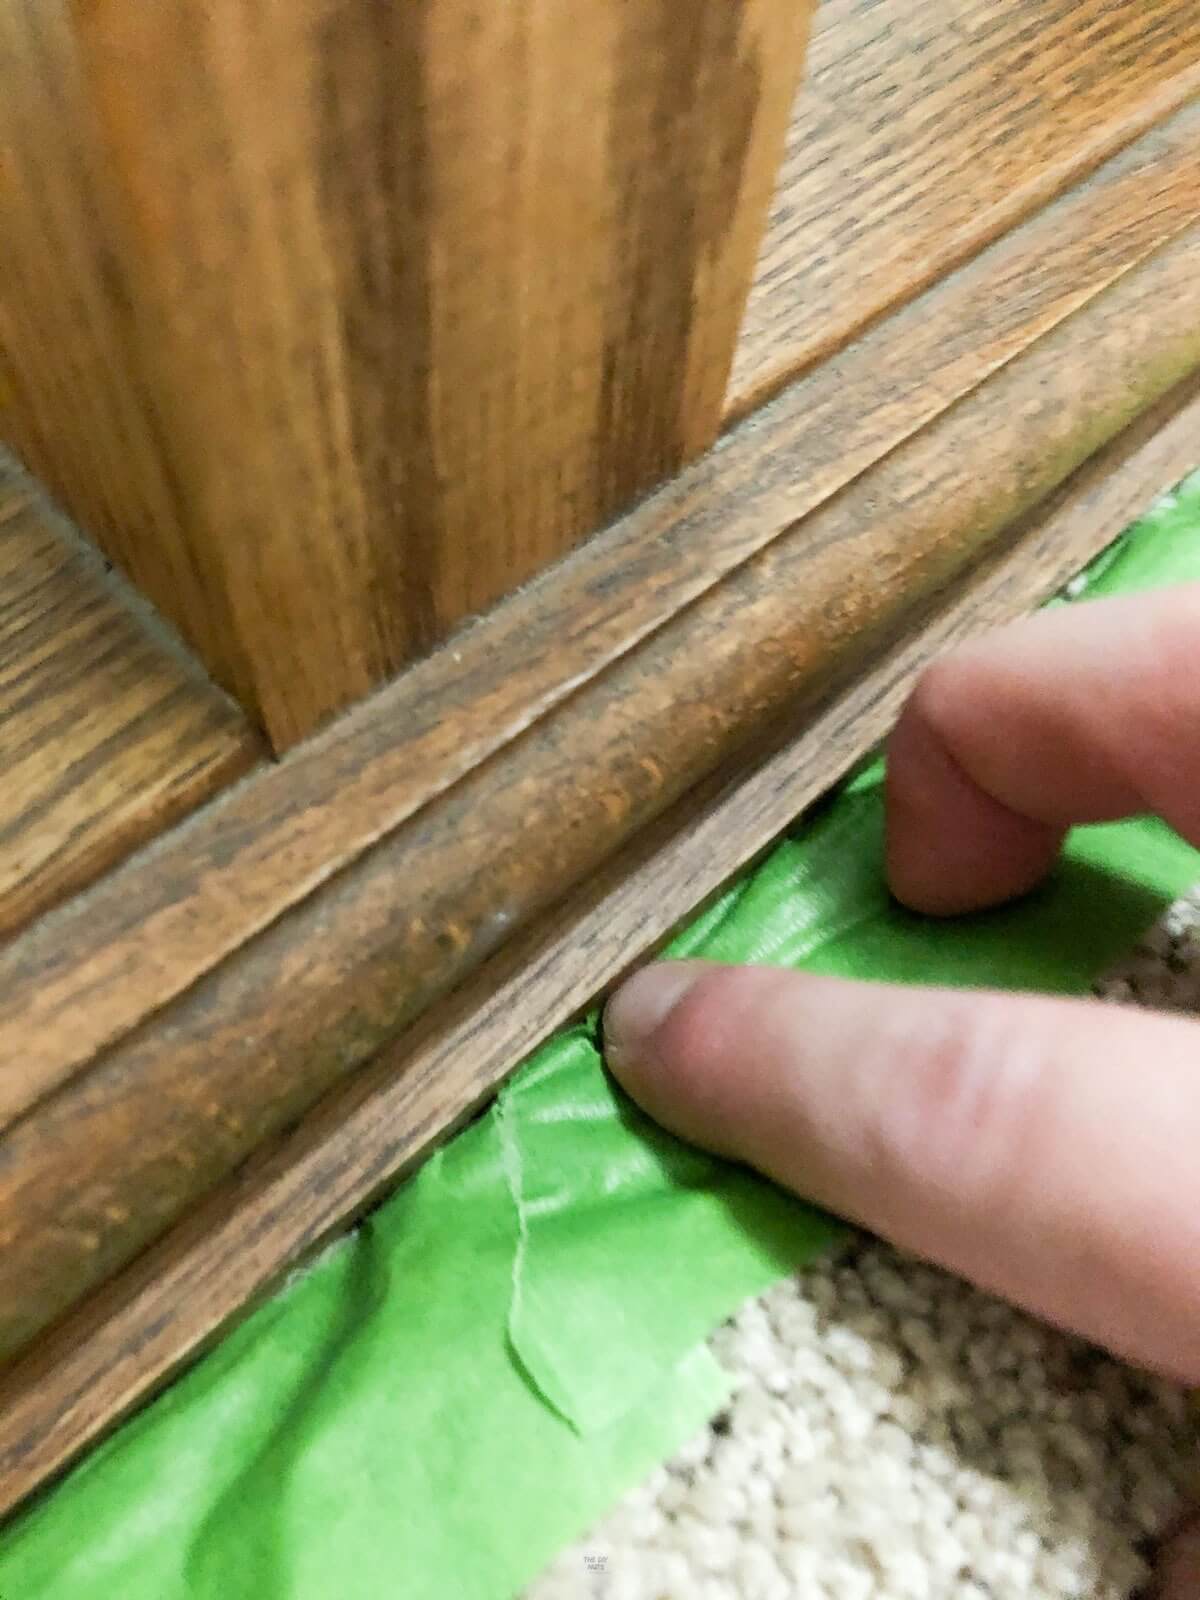 fingers pushing down green painter's tape on carpet under oak stair railing.